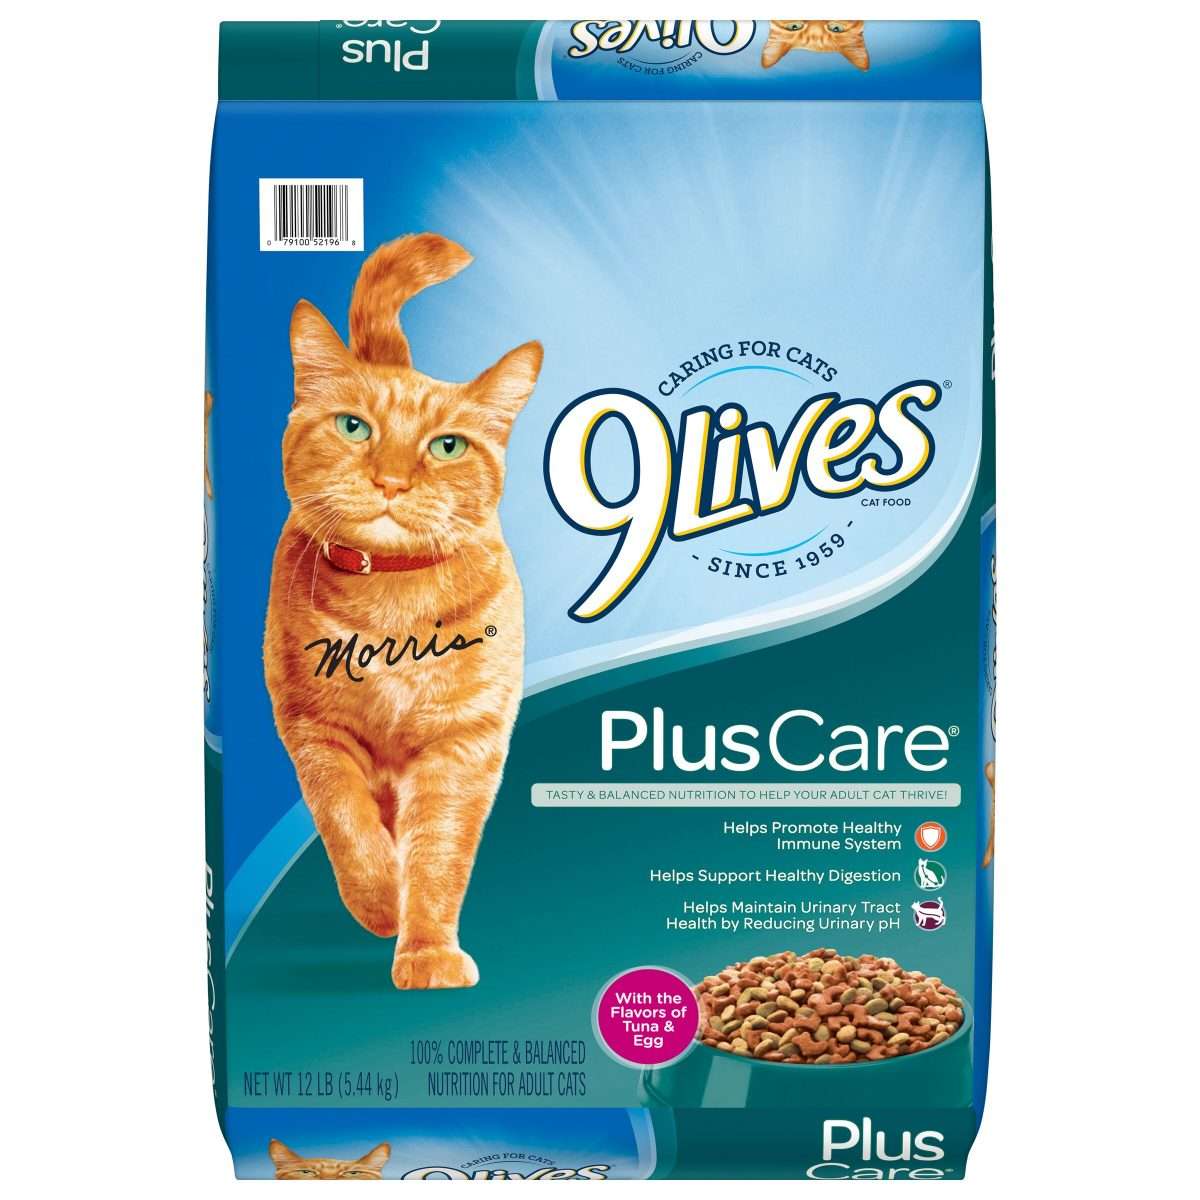 9Lives Plus Care Cat Food, 12